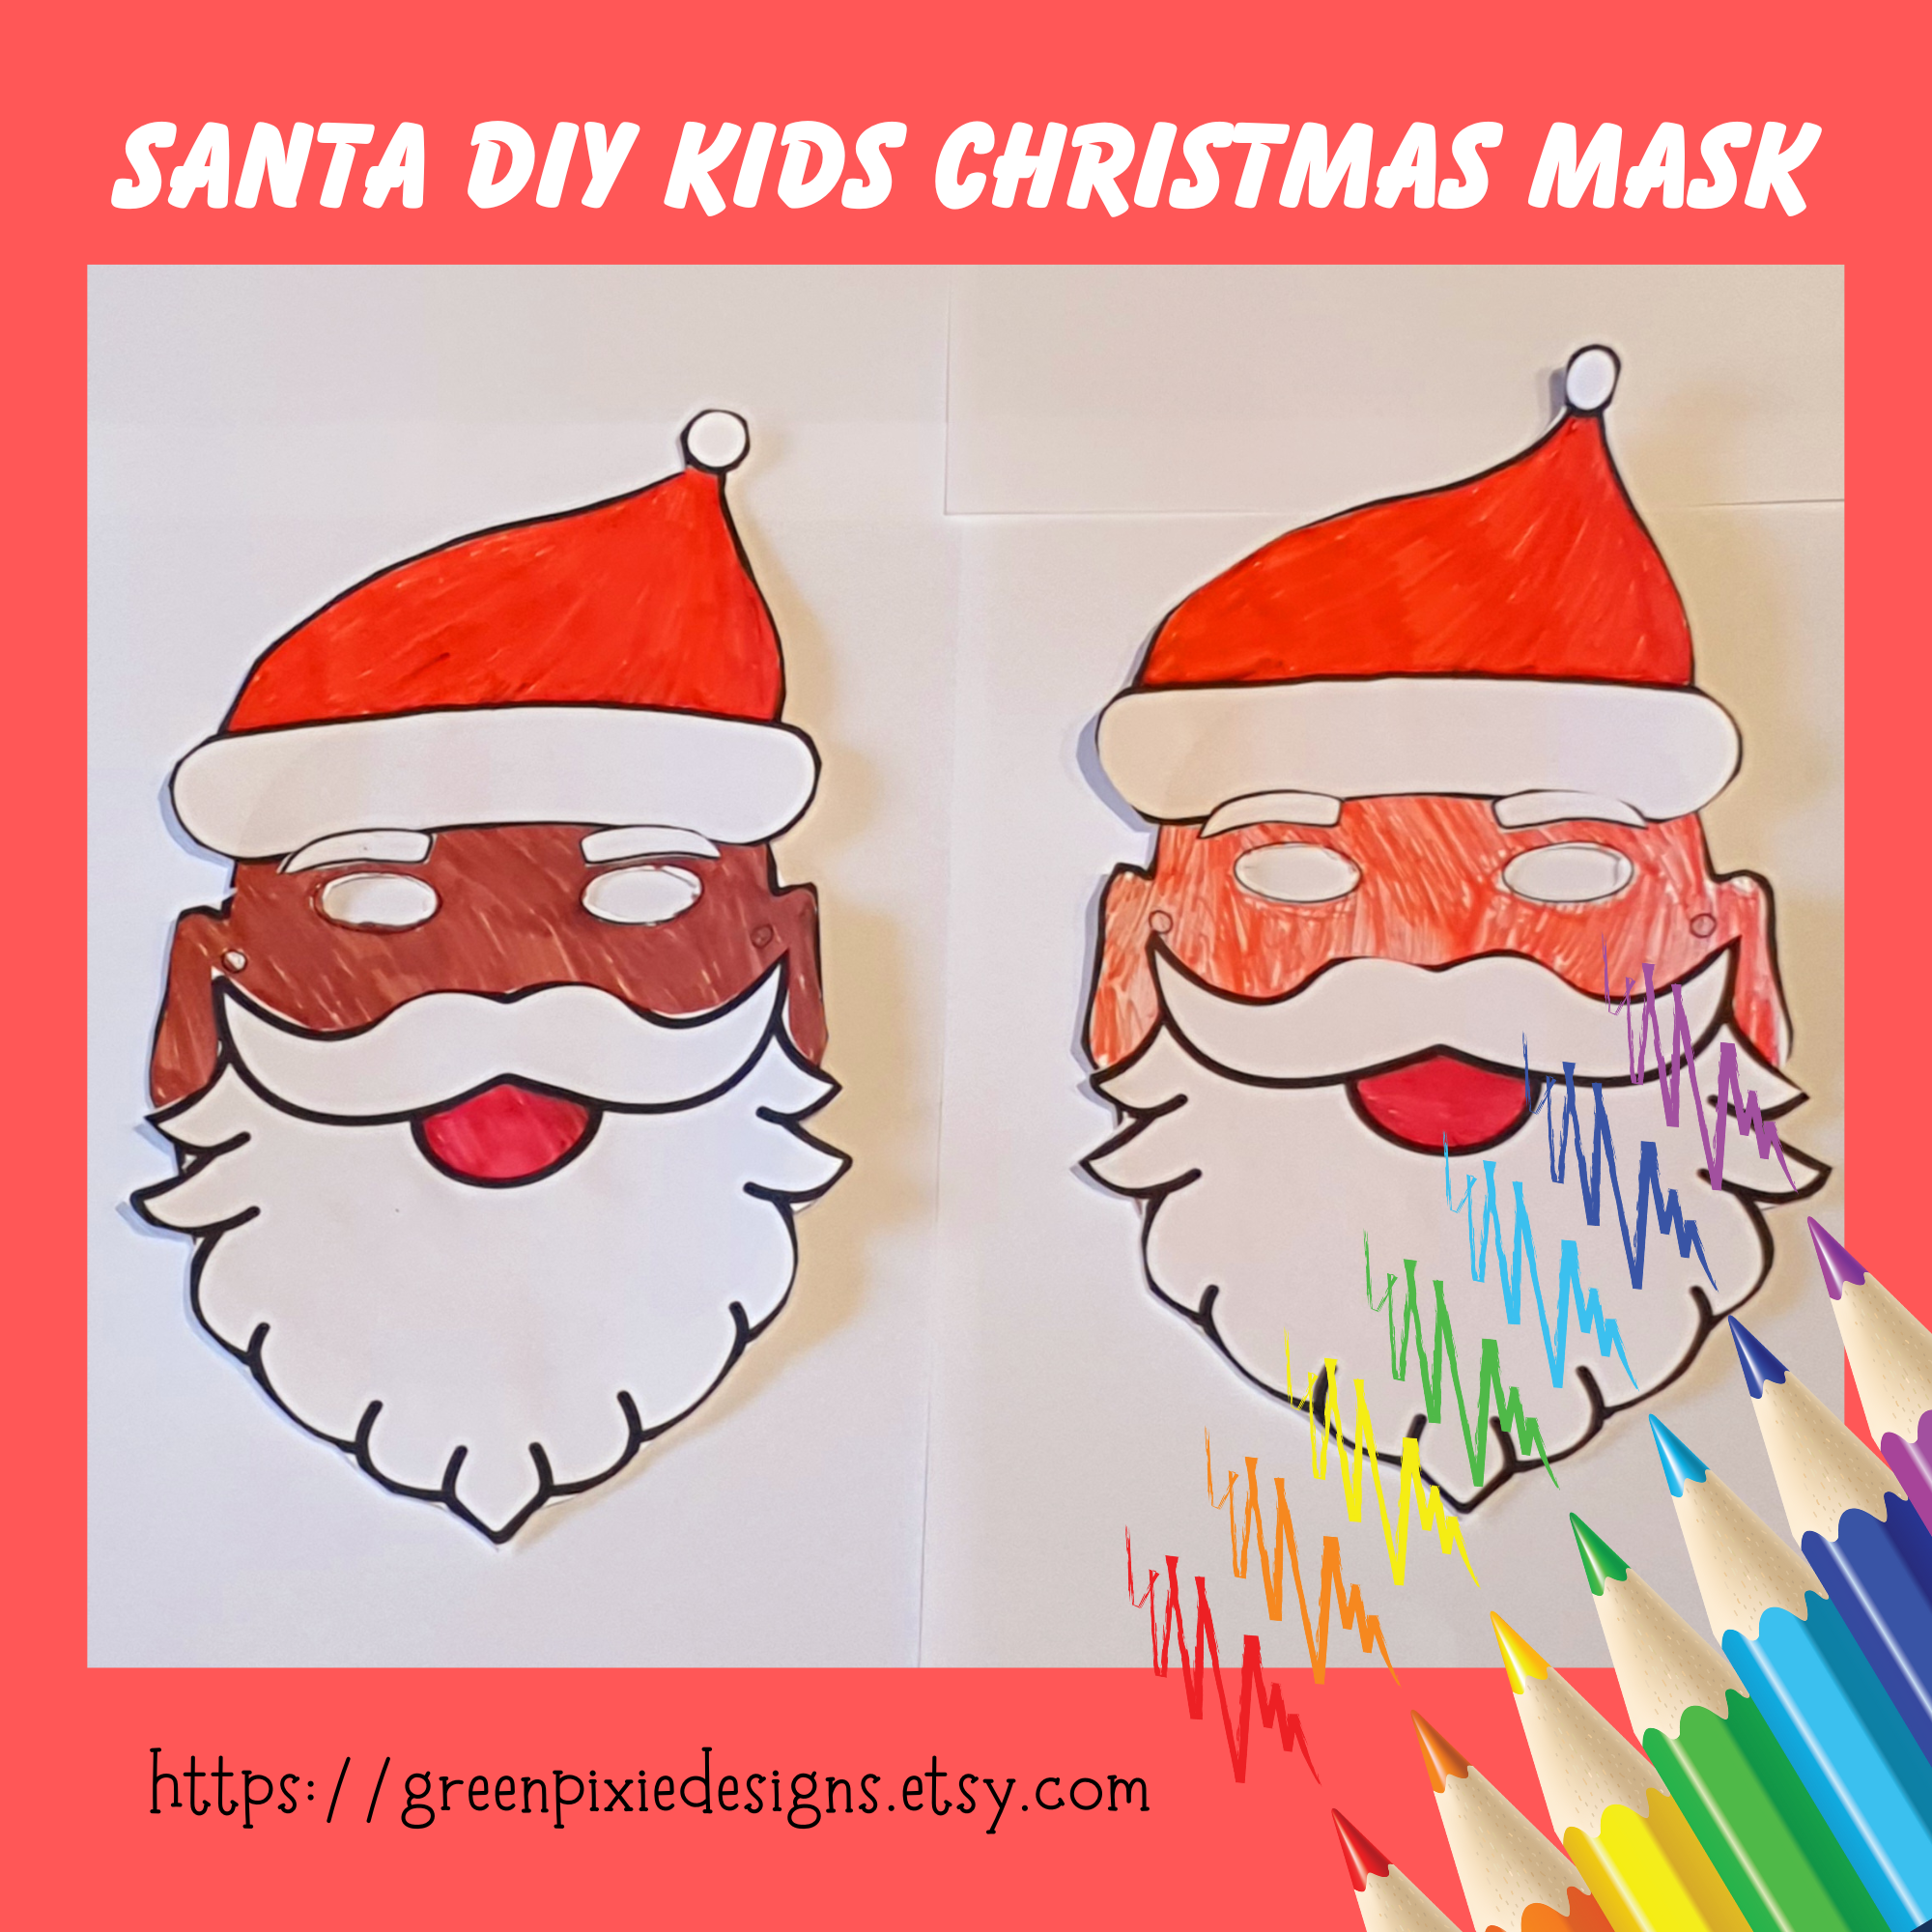 How to make a fun DIY Christmas Santa Claus Mask